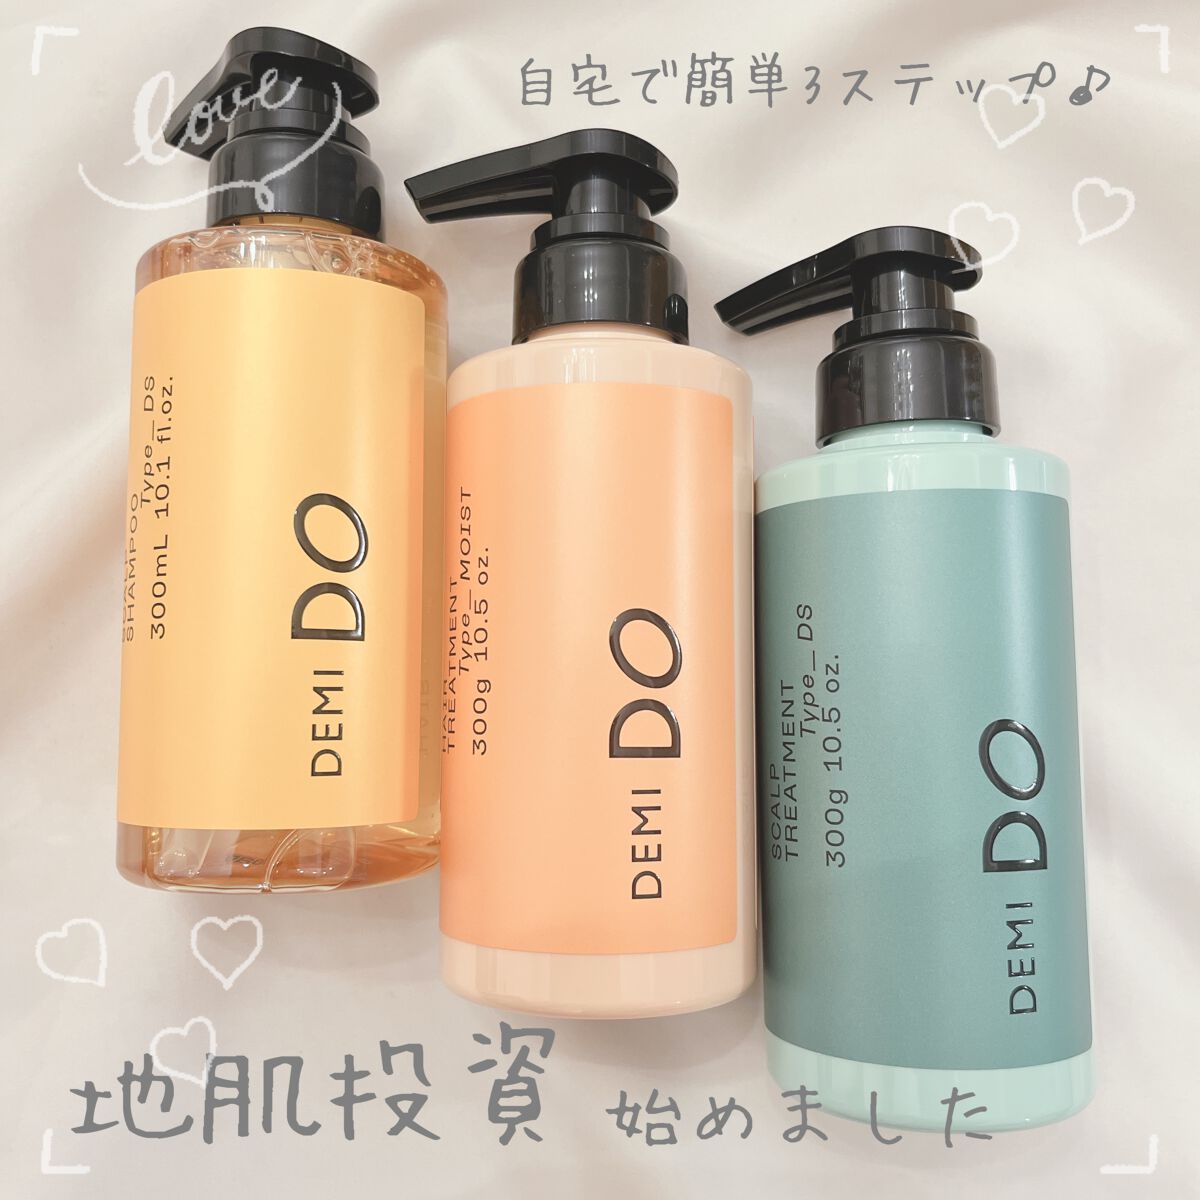 DEMI DO デミドゥスカルプエッセンスアドバンストグロウサプリメントセット セットアップの通販 コスメ・香水・美容 